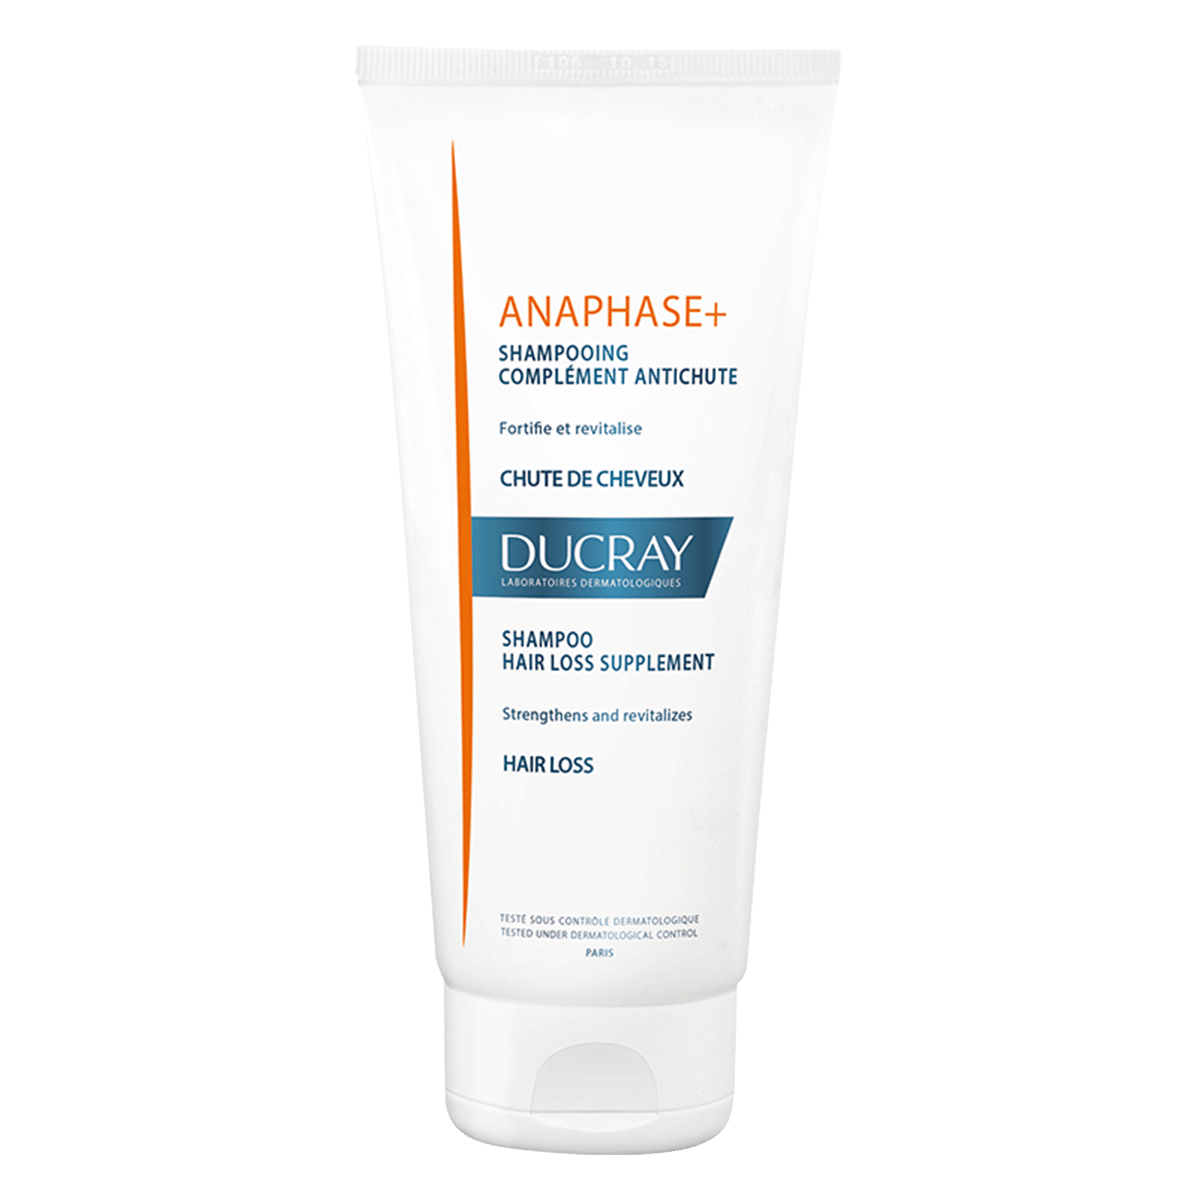 Ducray anaphase plus shampoo estimulante 200ml.